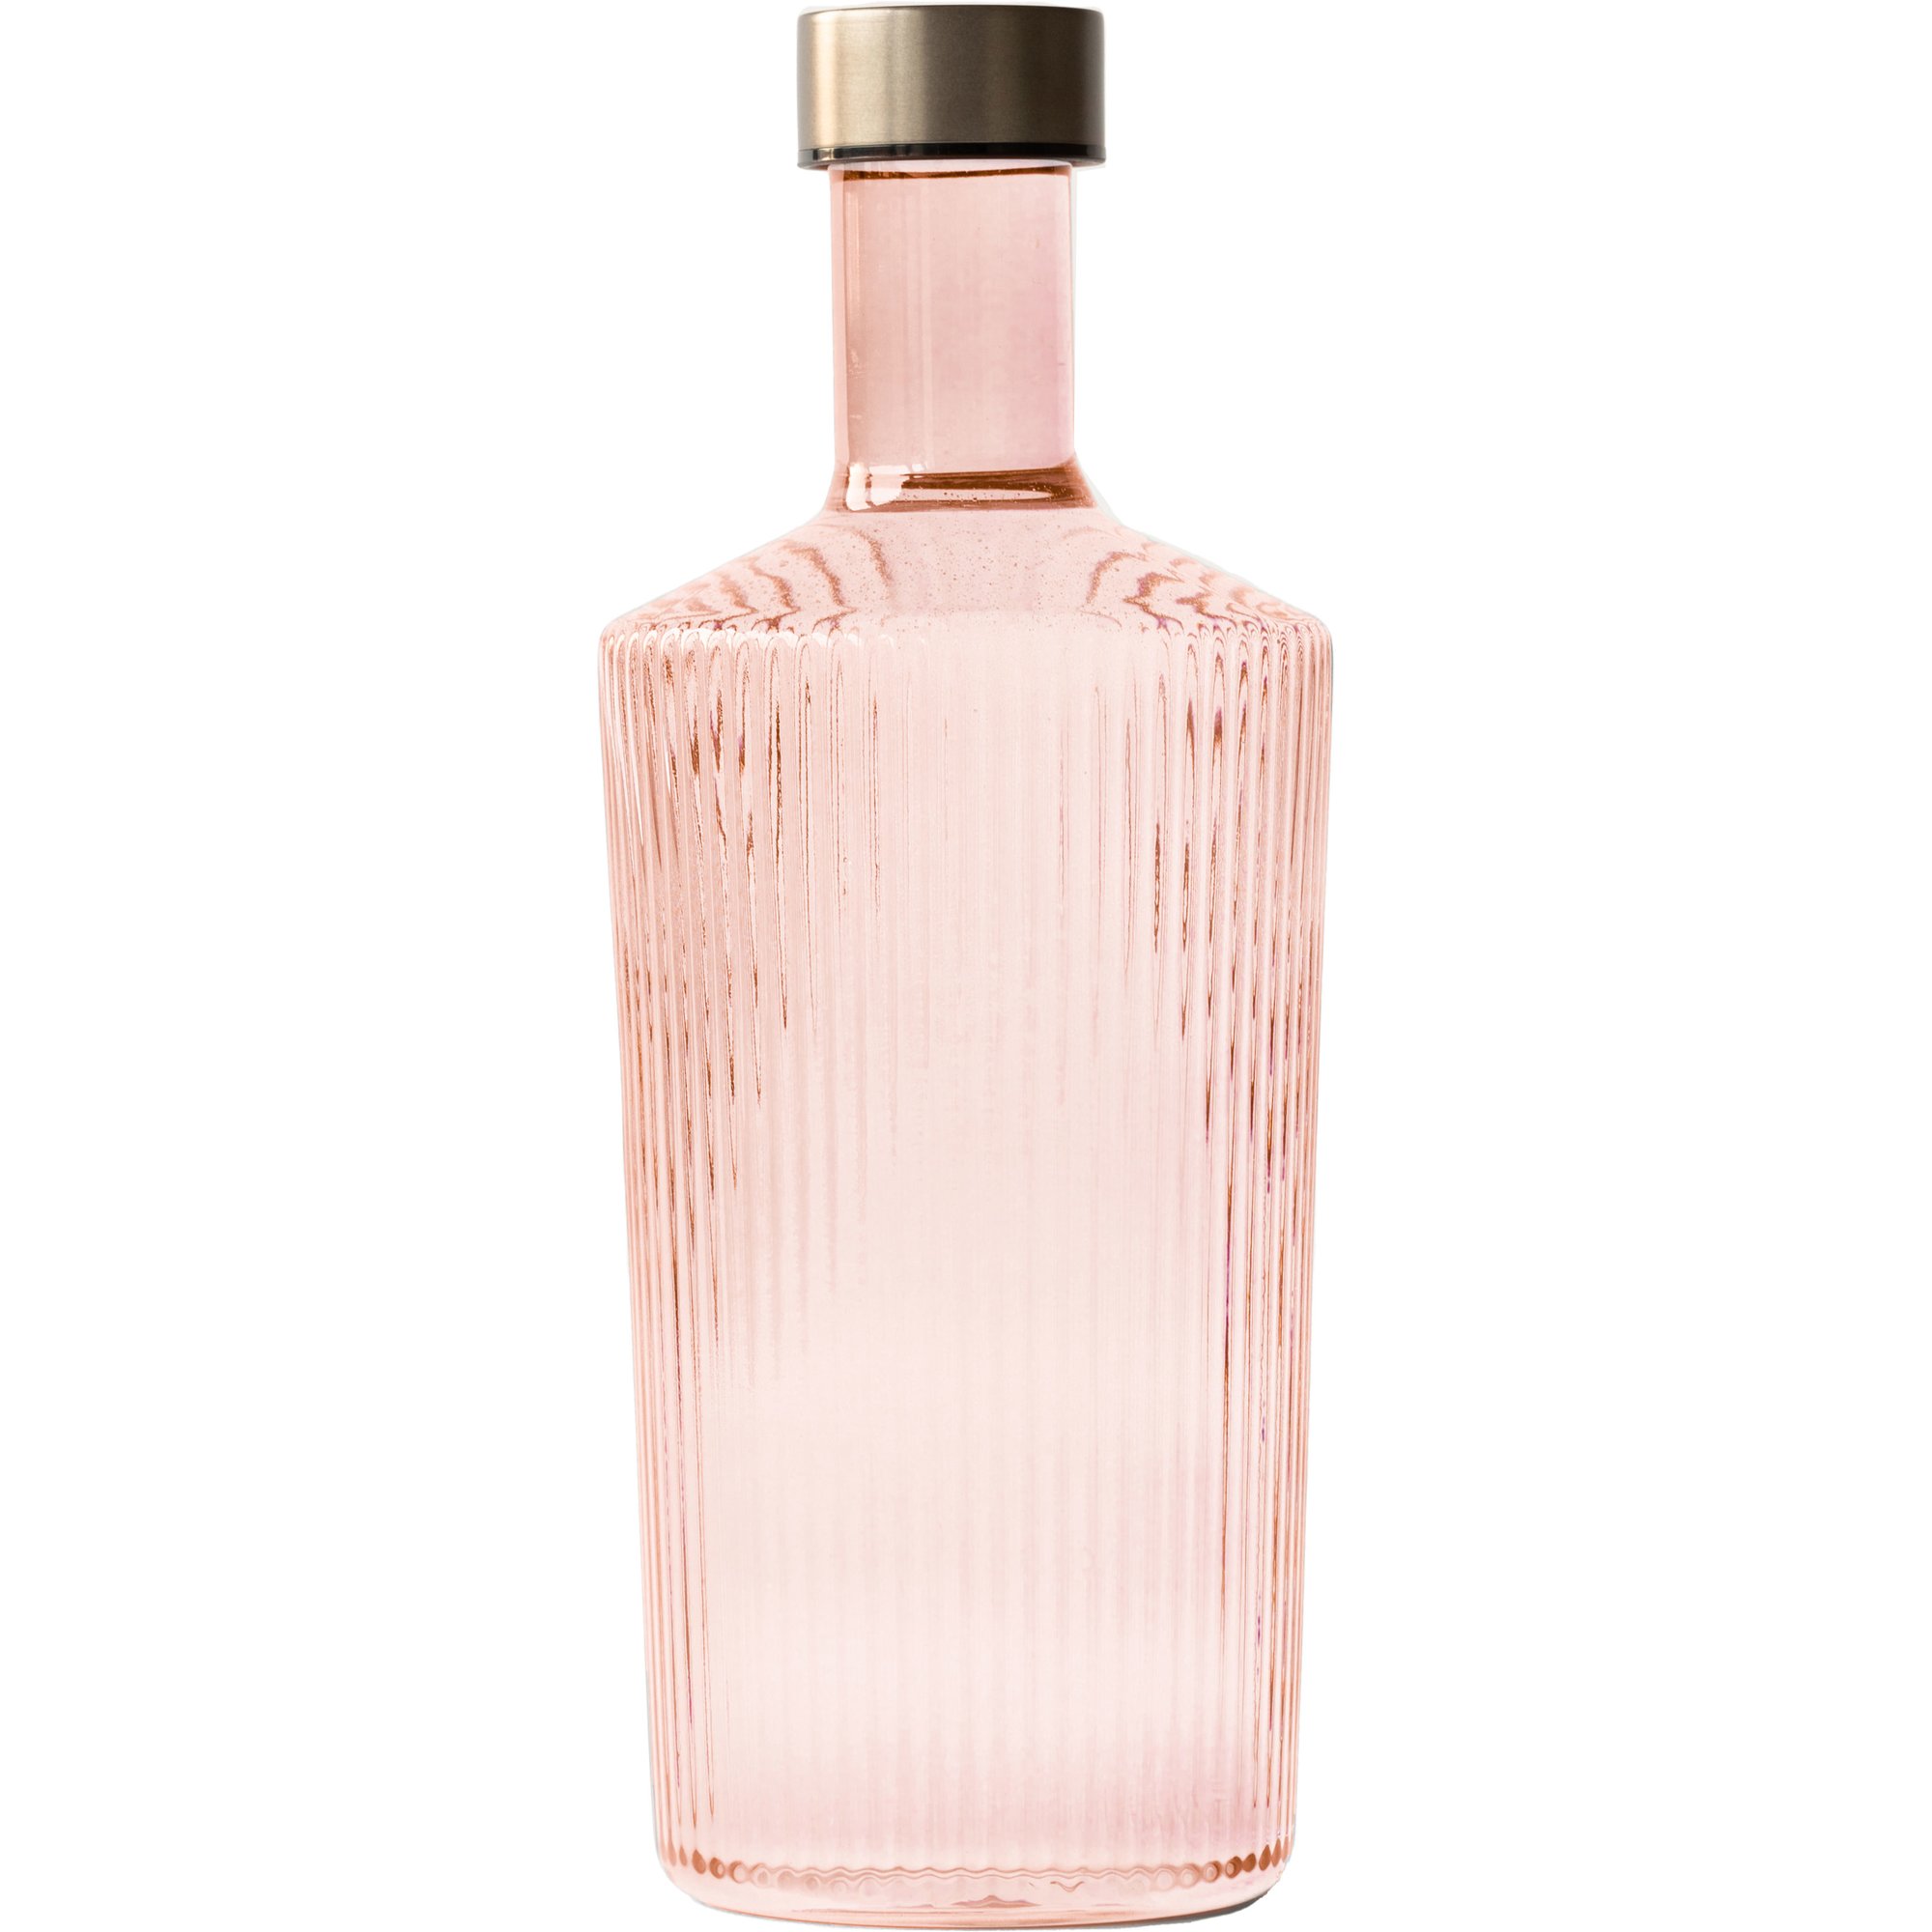 Bilde av Paveau Pink Vannflaske, 1,25 Liter, Rosa